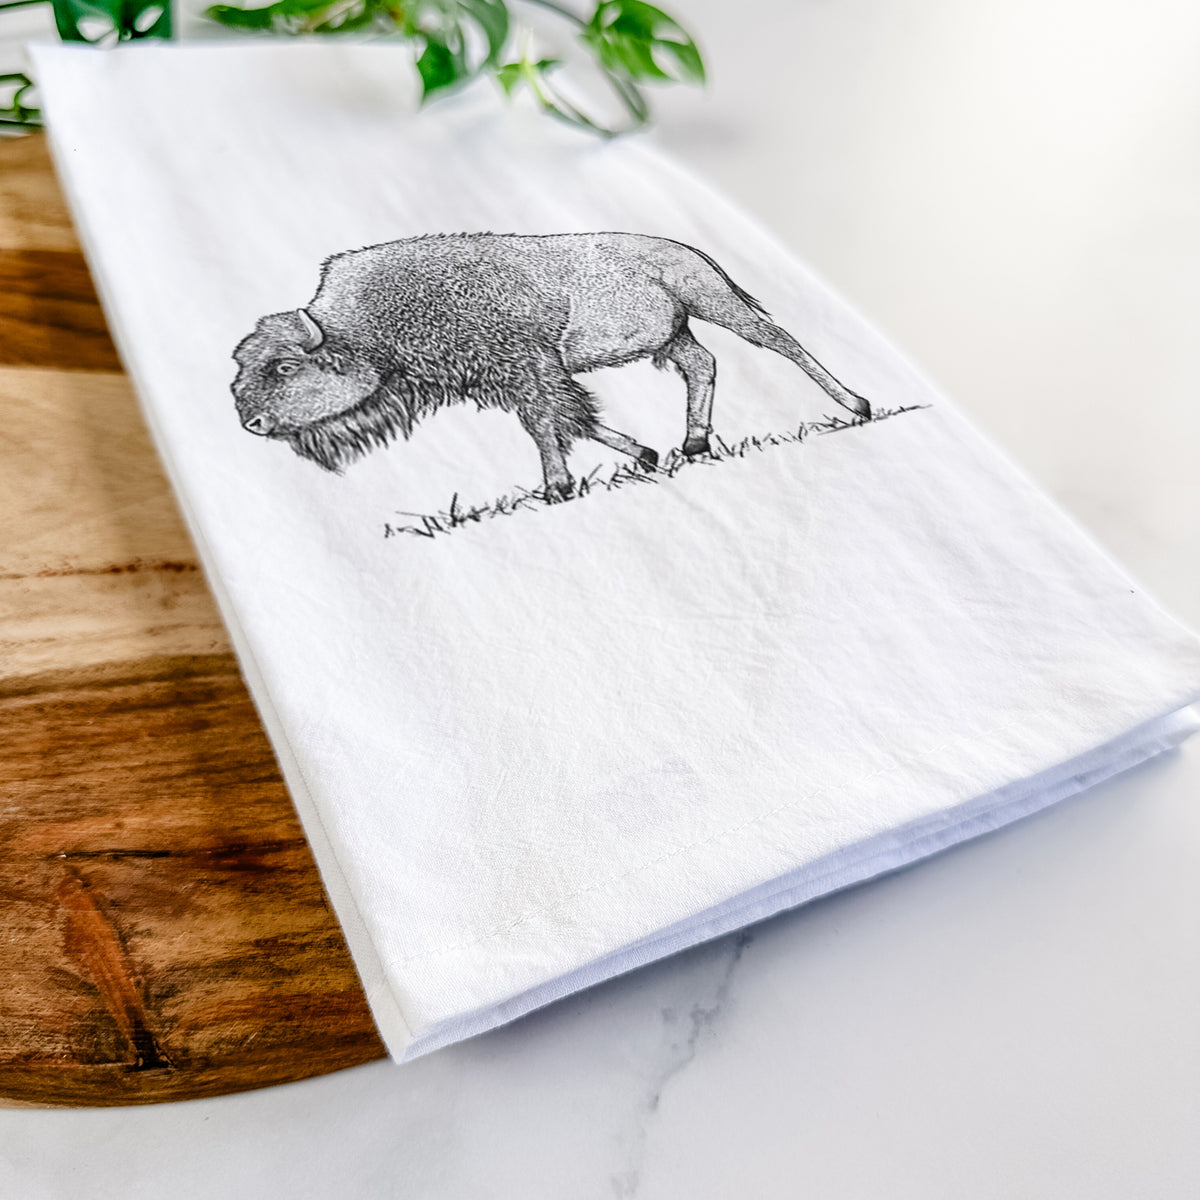 American Bison / Buffalo - Bison bison Tea Towel